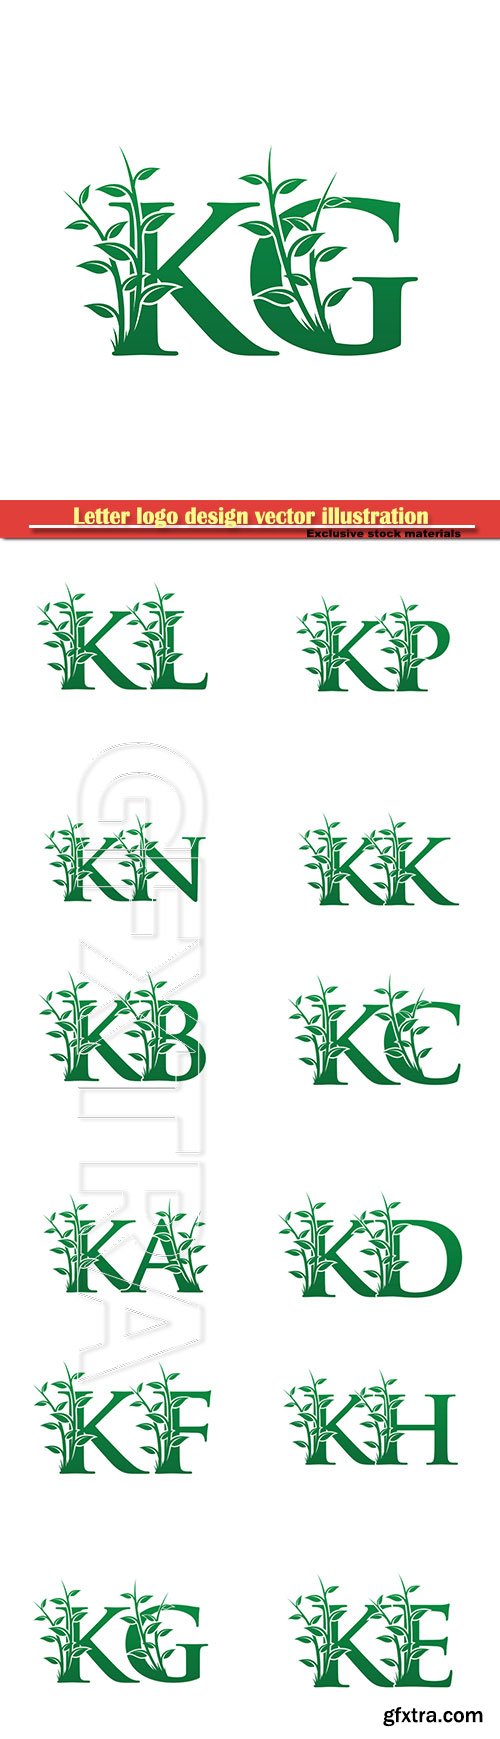 Letter logo design vector illustration template # 23